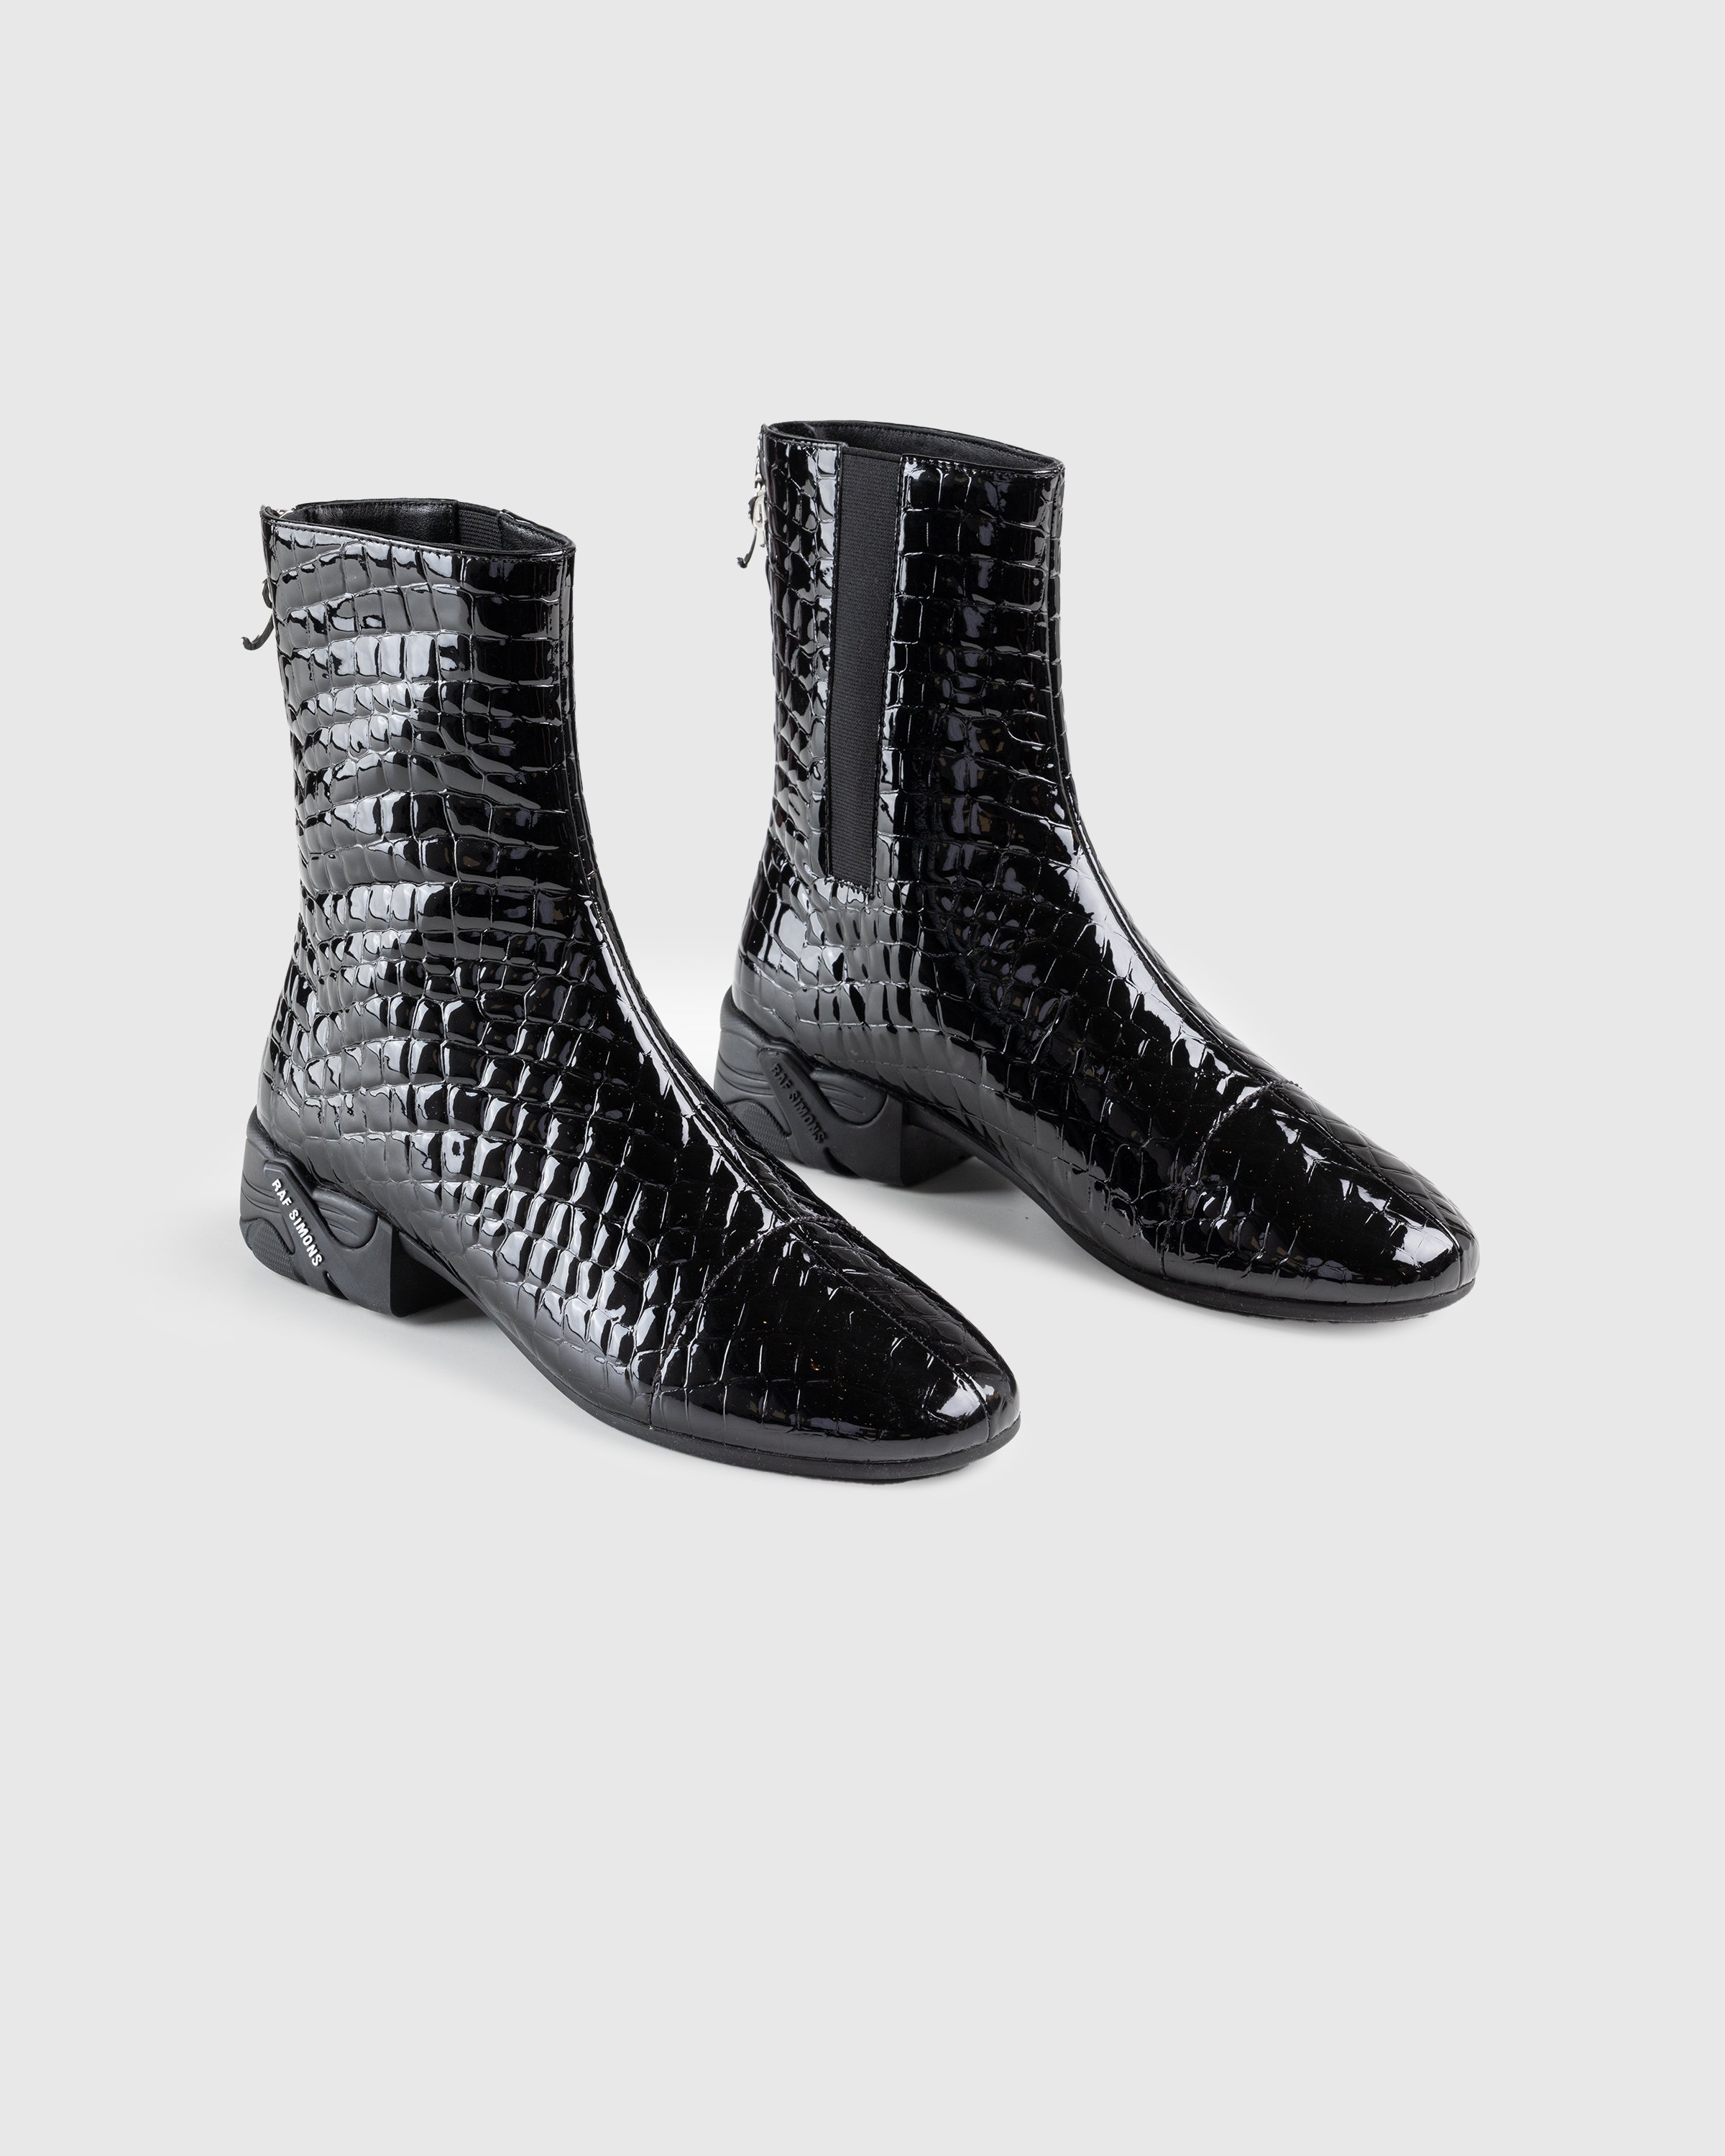 Raf Simons - Solaris High Leather Boot Black Croc - Footwear - Black - Image 3